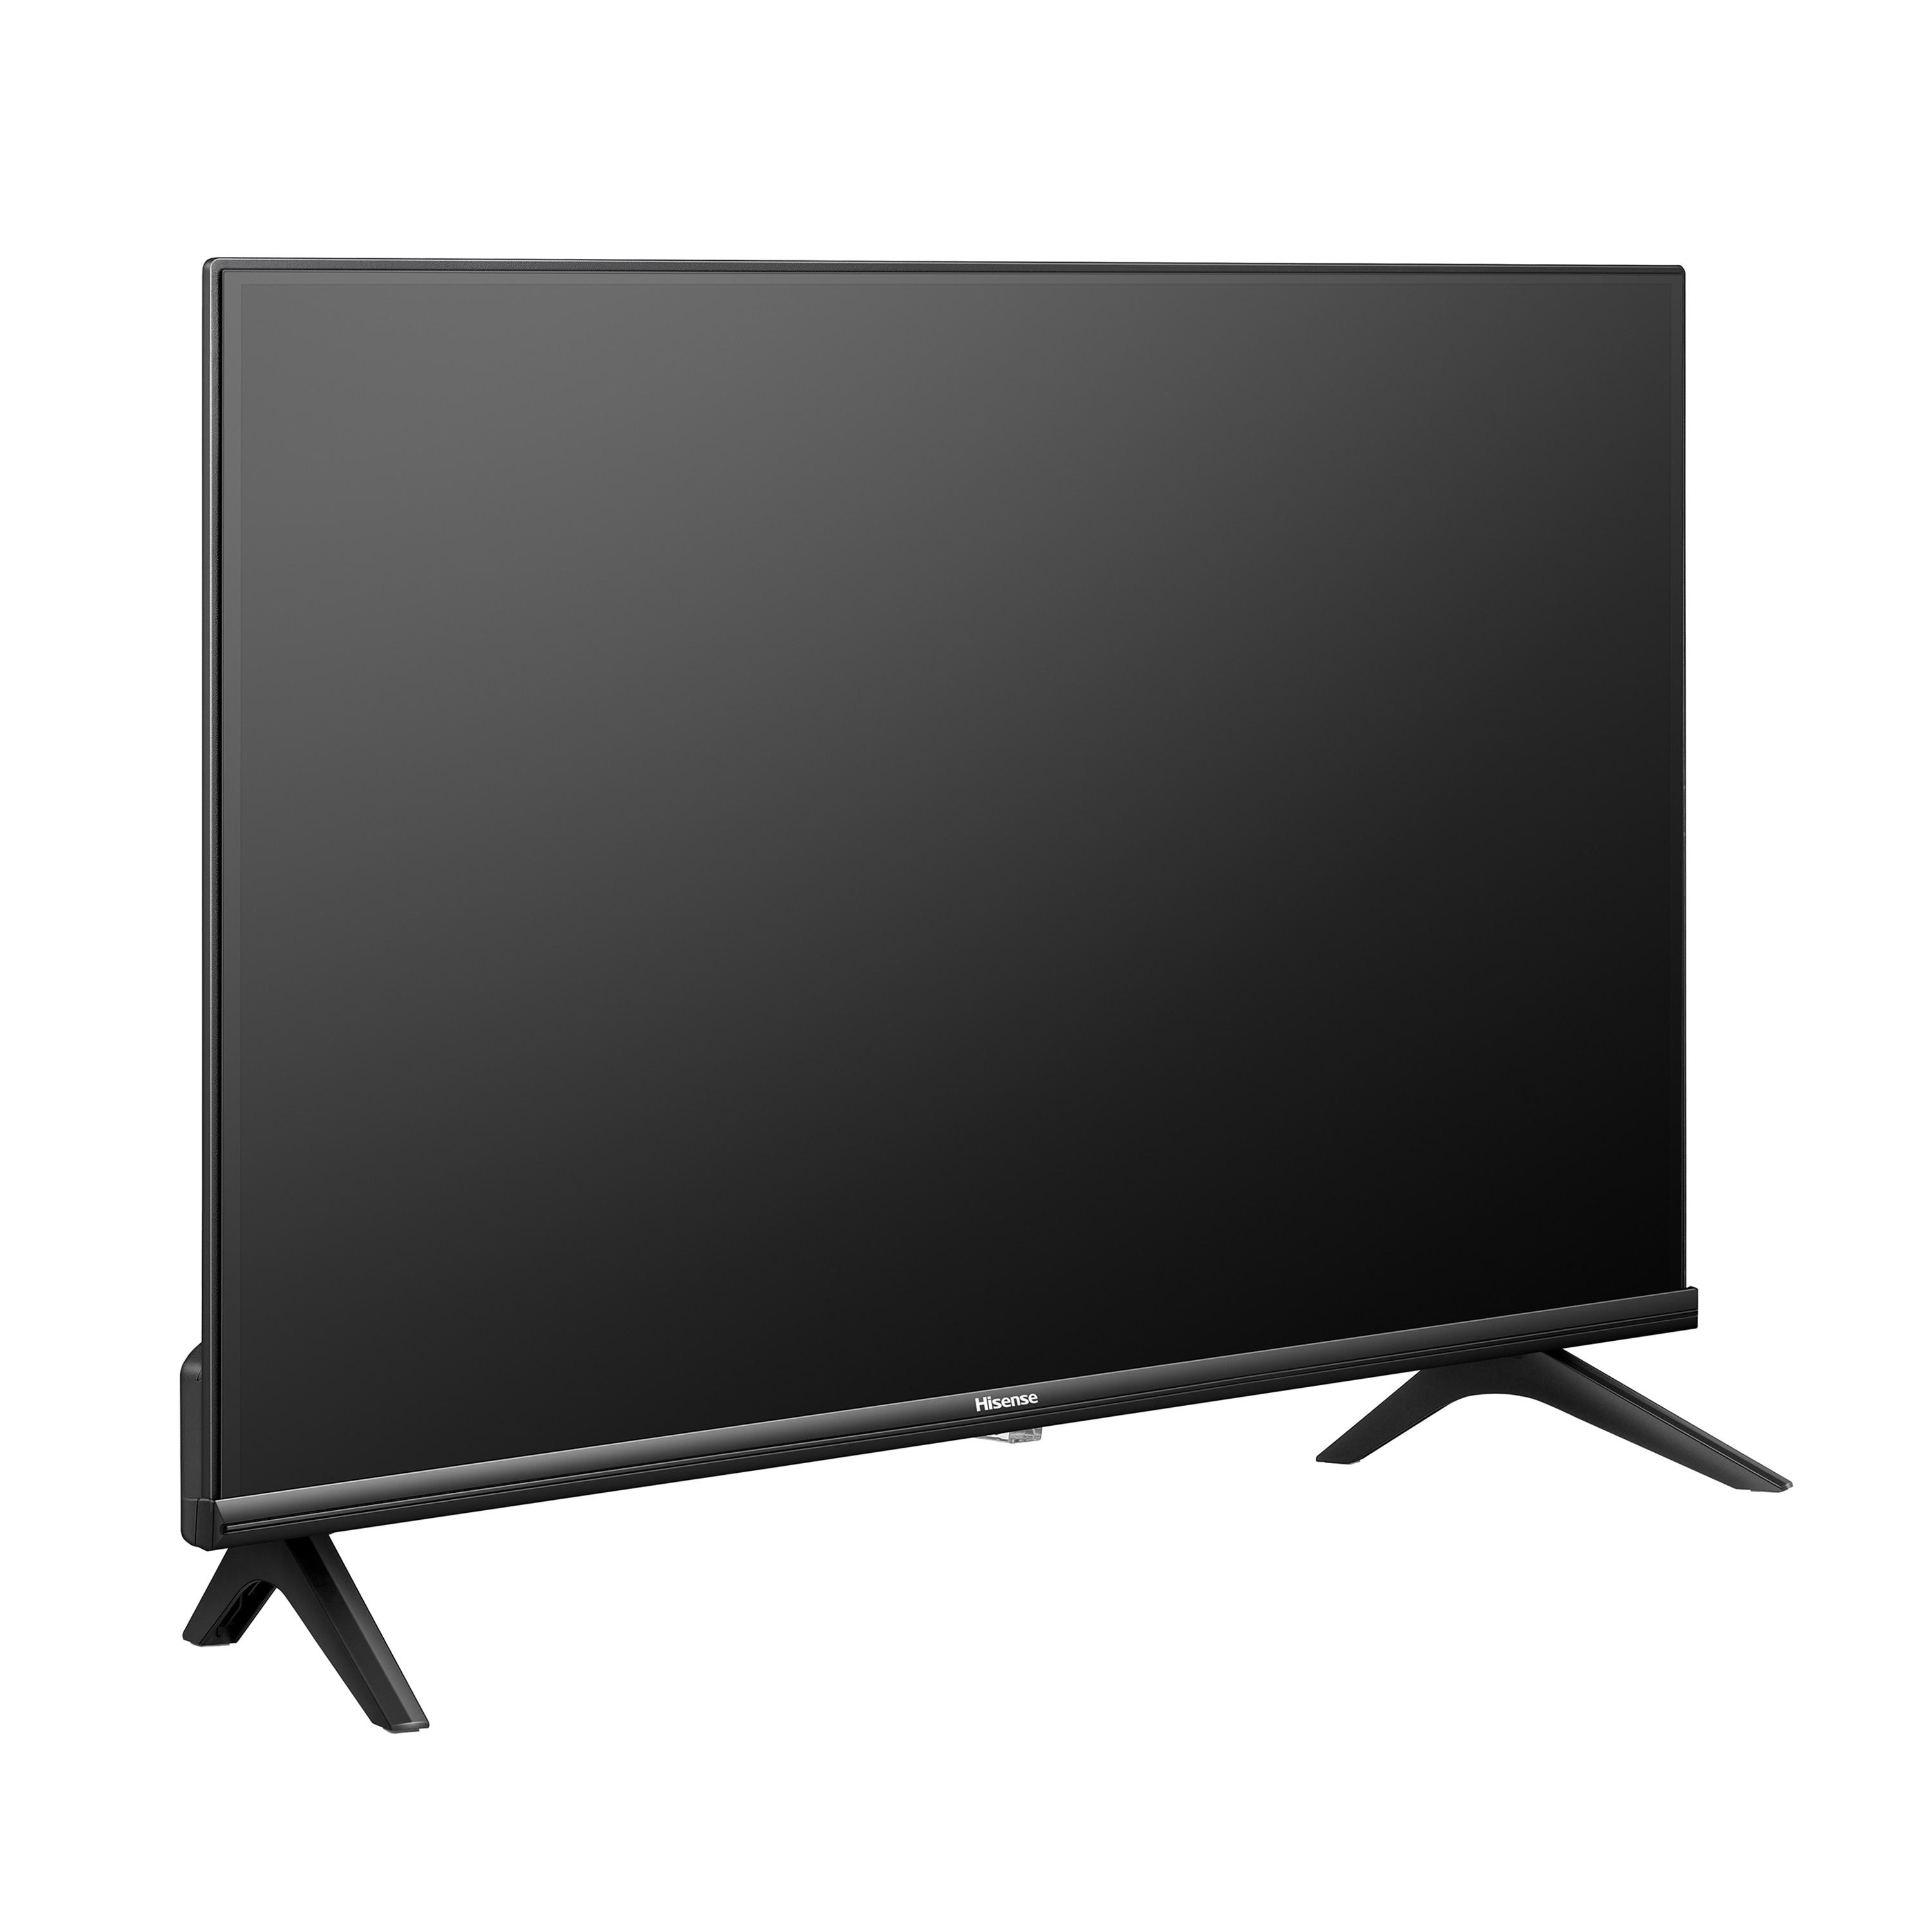 HISENSE 40A4K LED TV (Flat, TV, 101 VIDAA / SMART 40 cm, U6) Zoll Full-HD